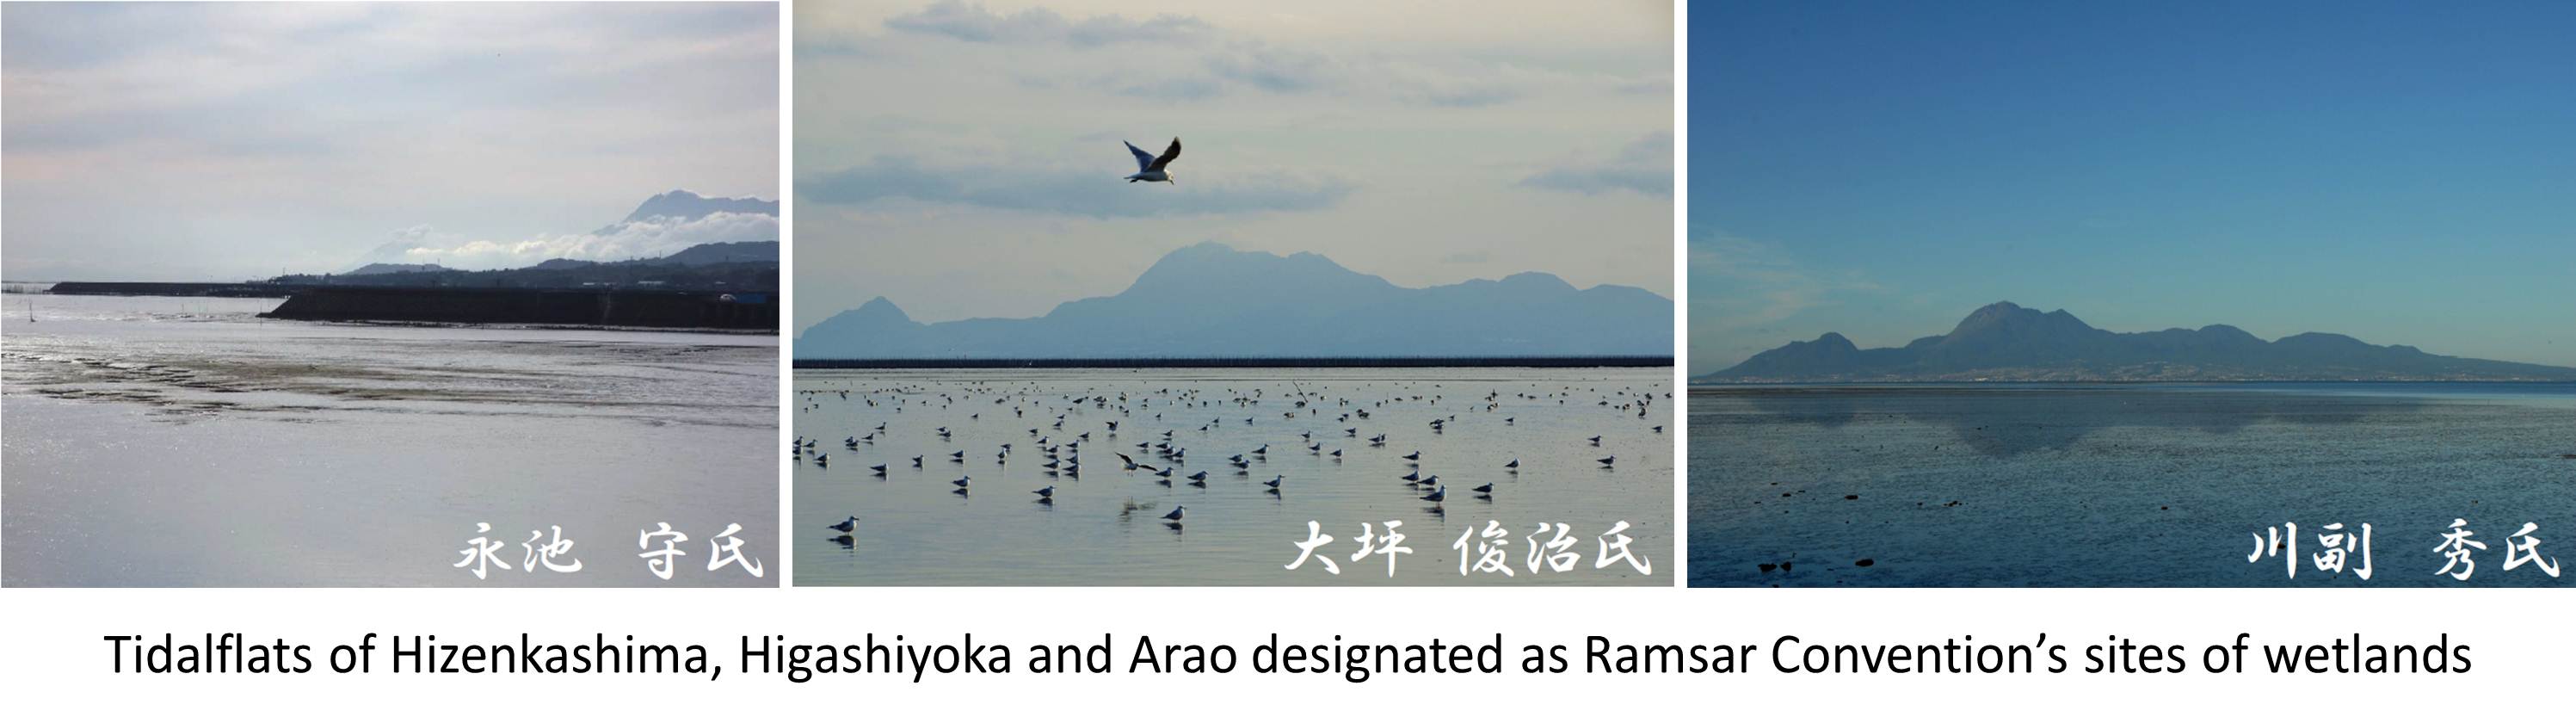 Tidalflats of Hizenkashima, Higashiyoka and Arao designated as Ramsar Convention's sites of wetlands